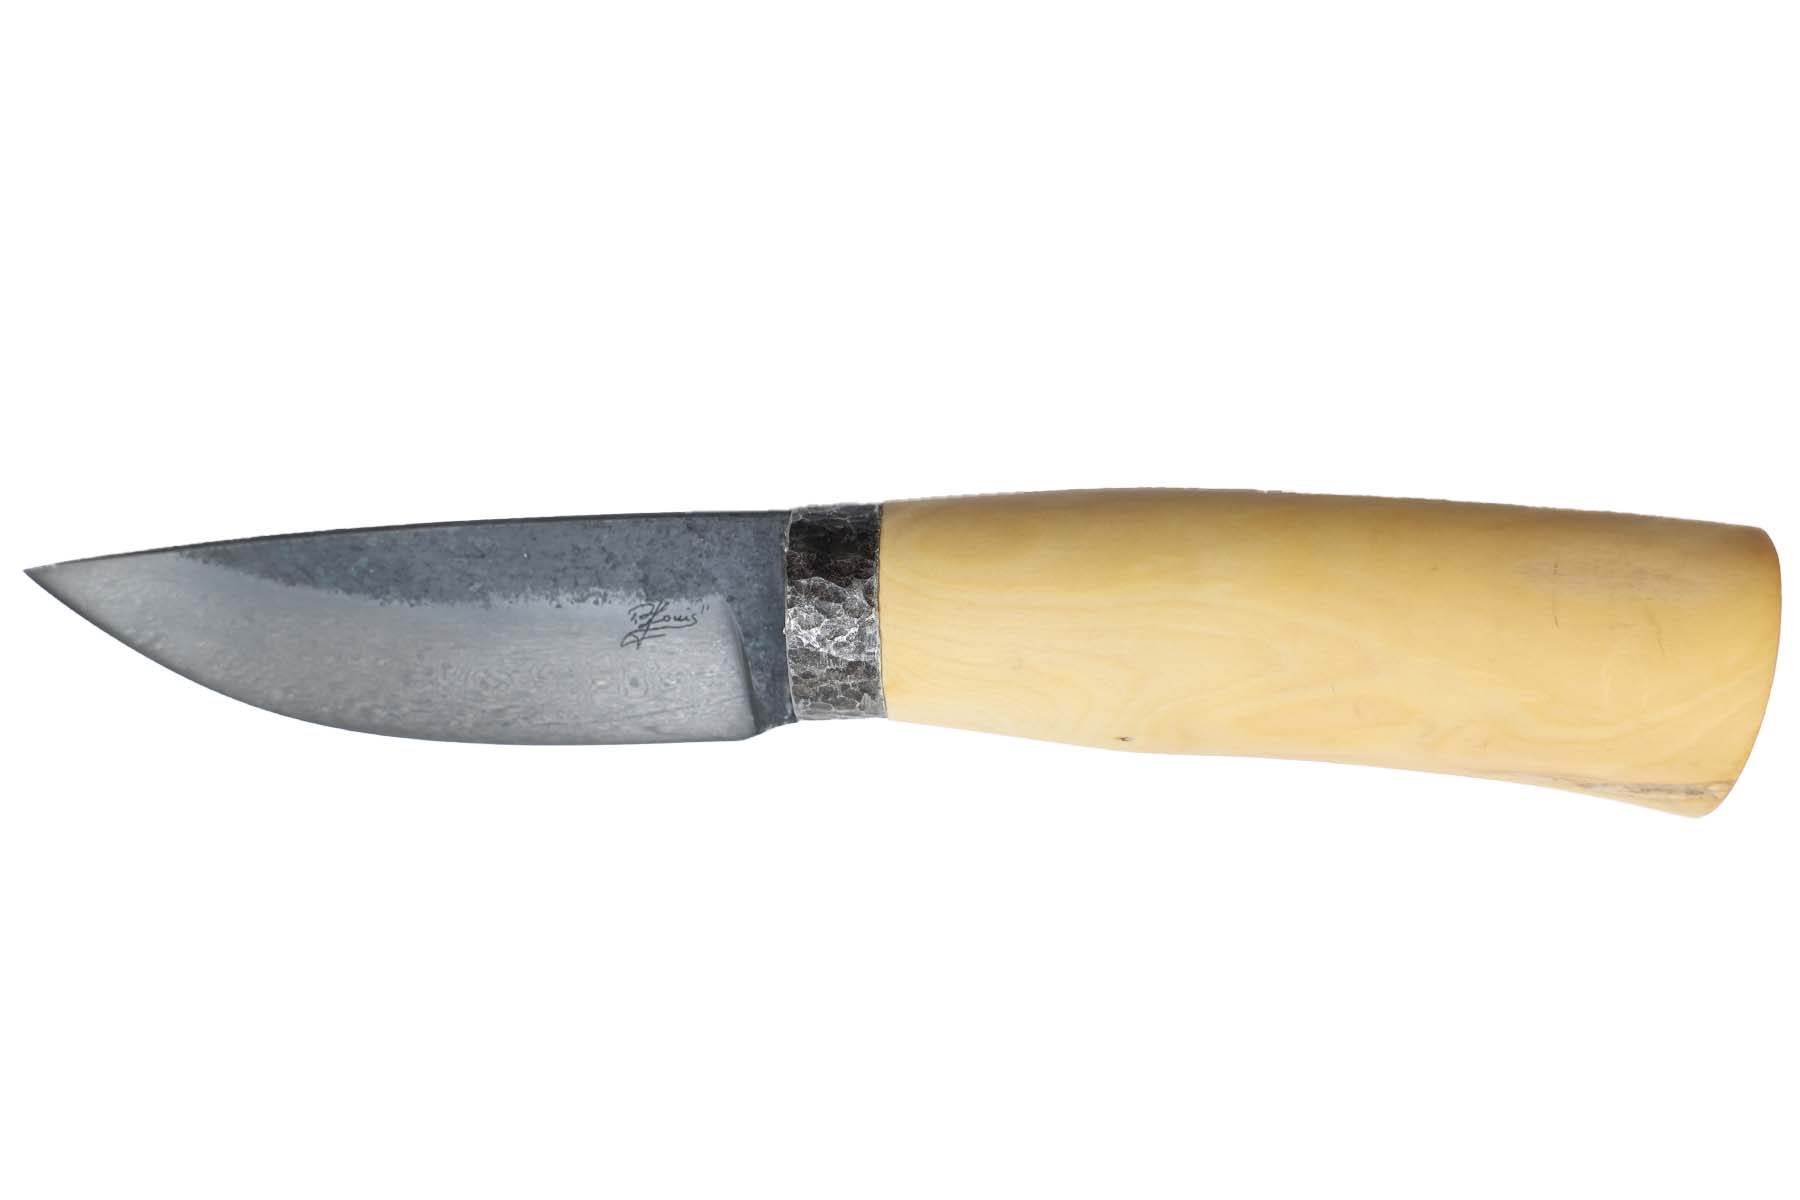 Couteau artisanal fixe de Jean-louis Regel - buis